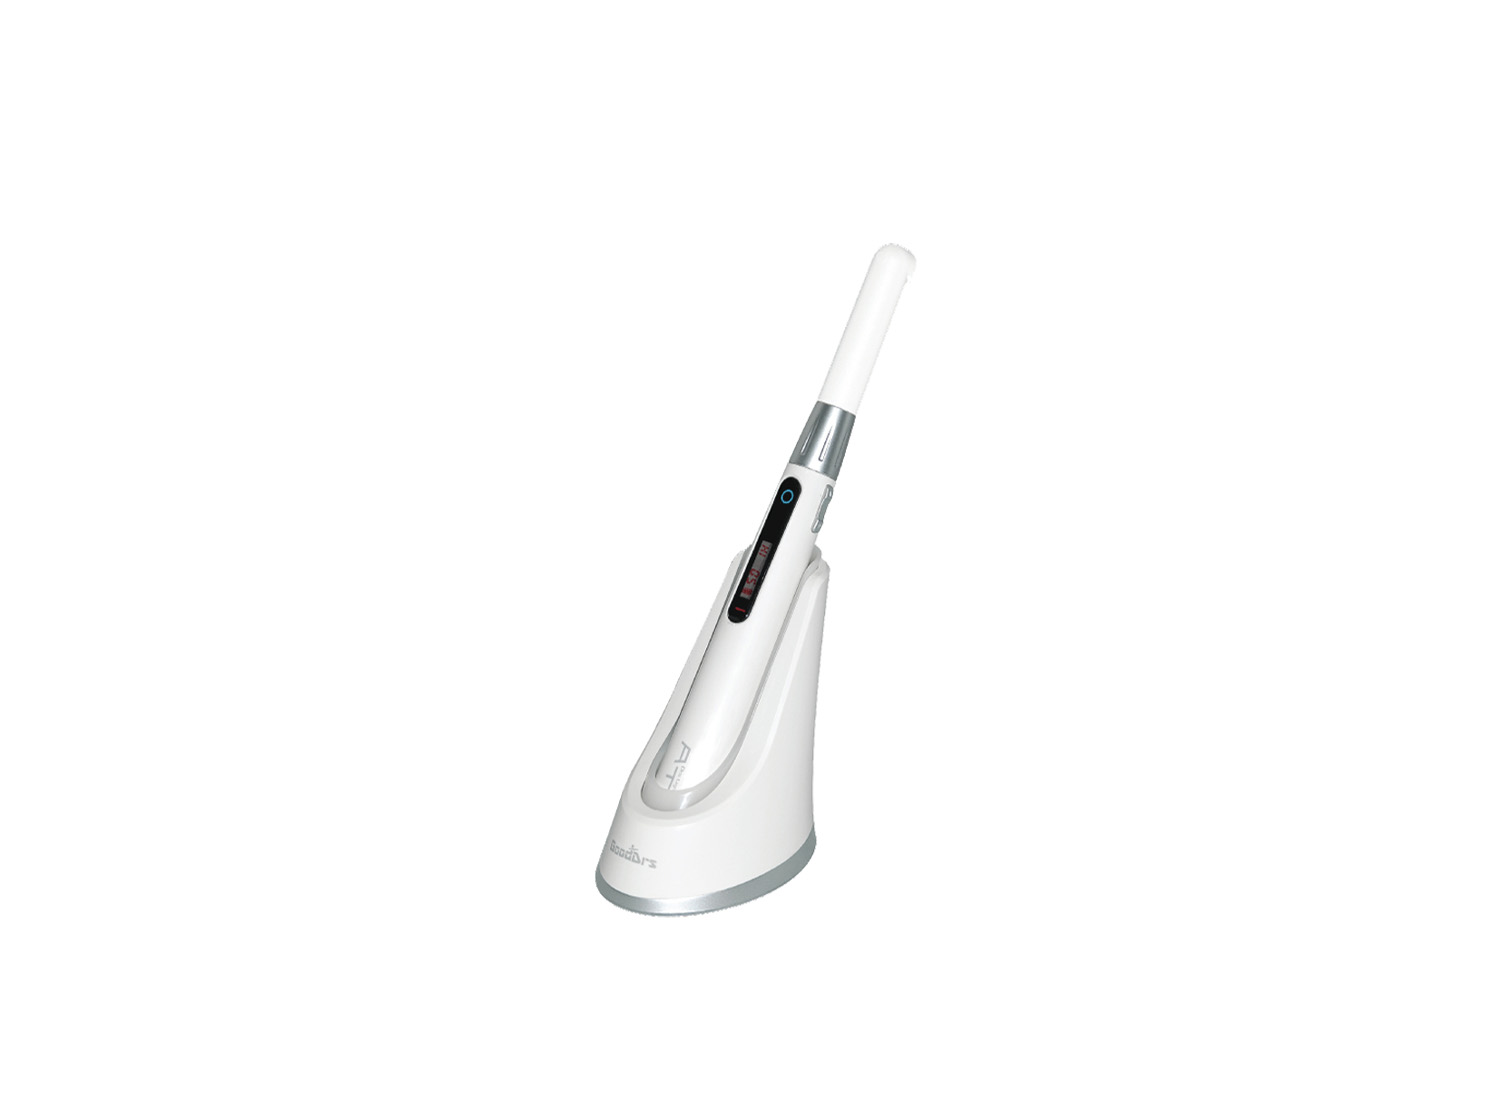 دستگاه لایت کیور دندانپزشکی مدل Dr's light AT برند GoodDrs